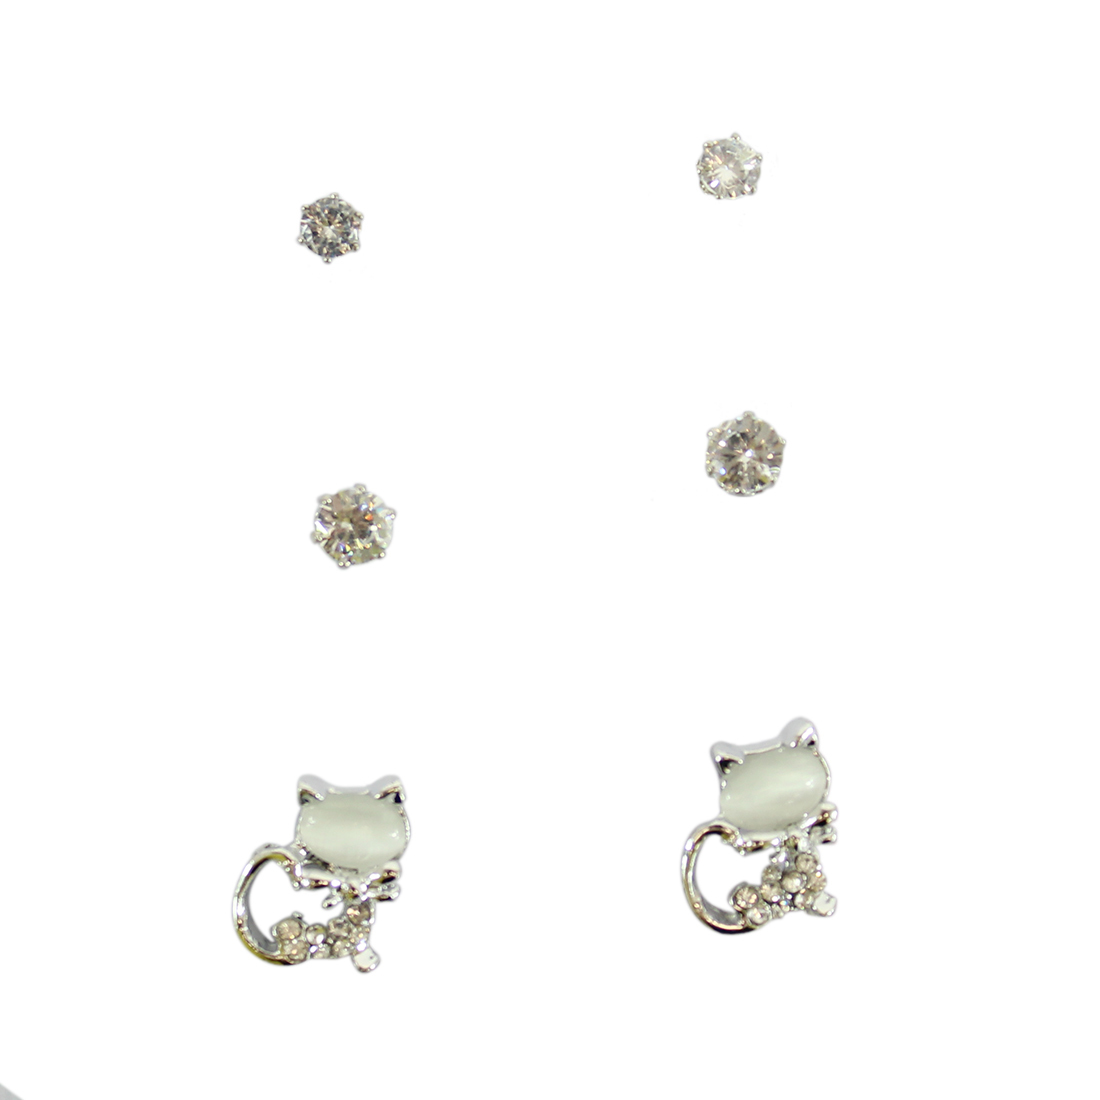 Set of three diamond earrings with cat